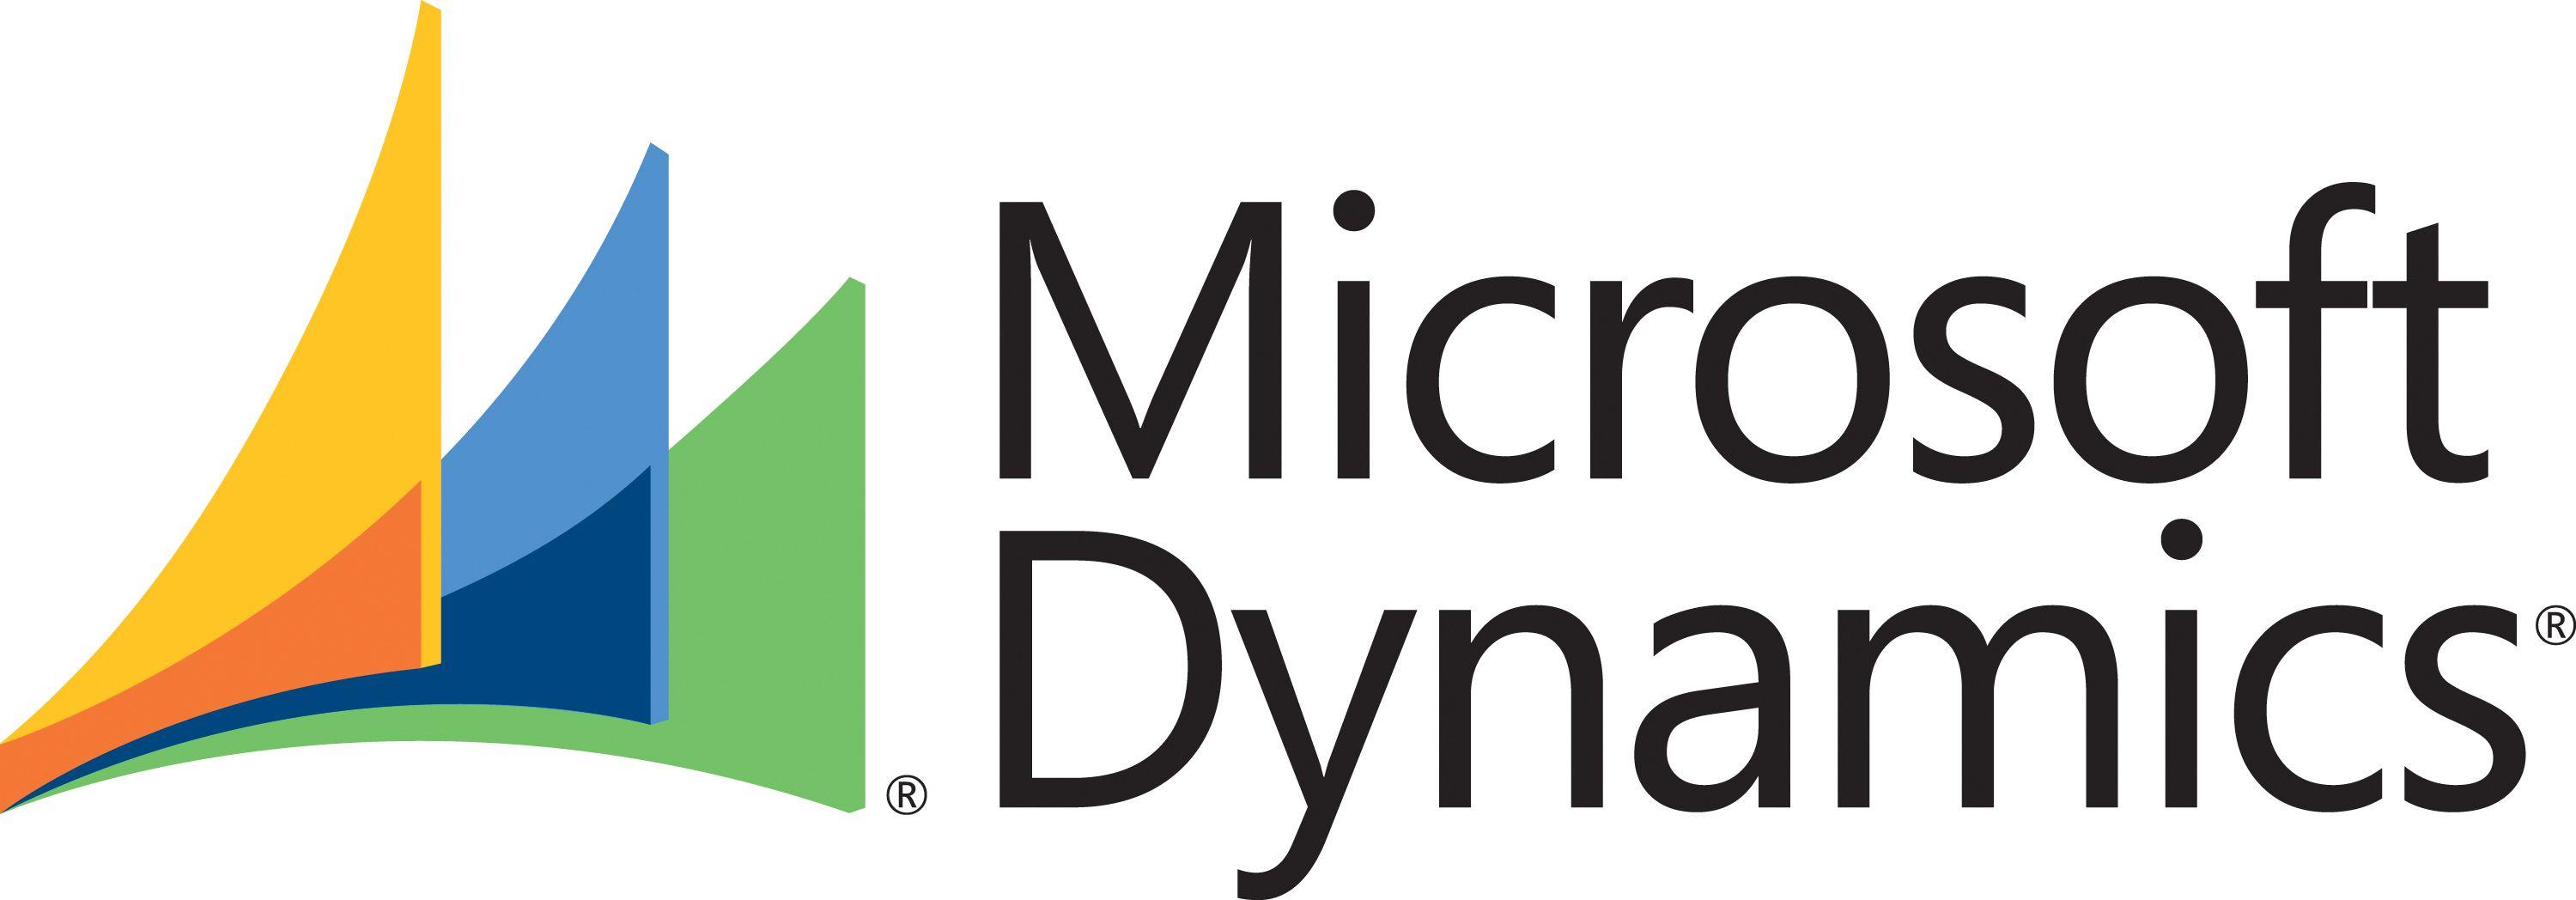 Microsoft Office 365 Dynamics Logo - Dynamics 365